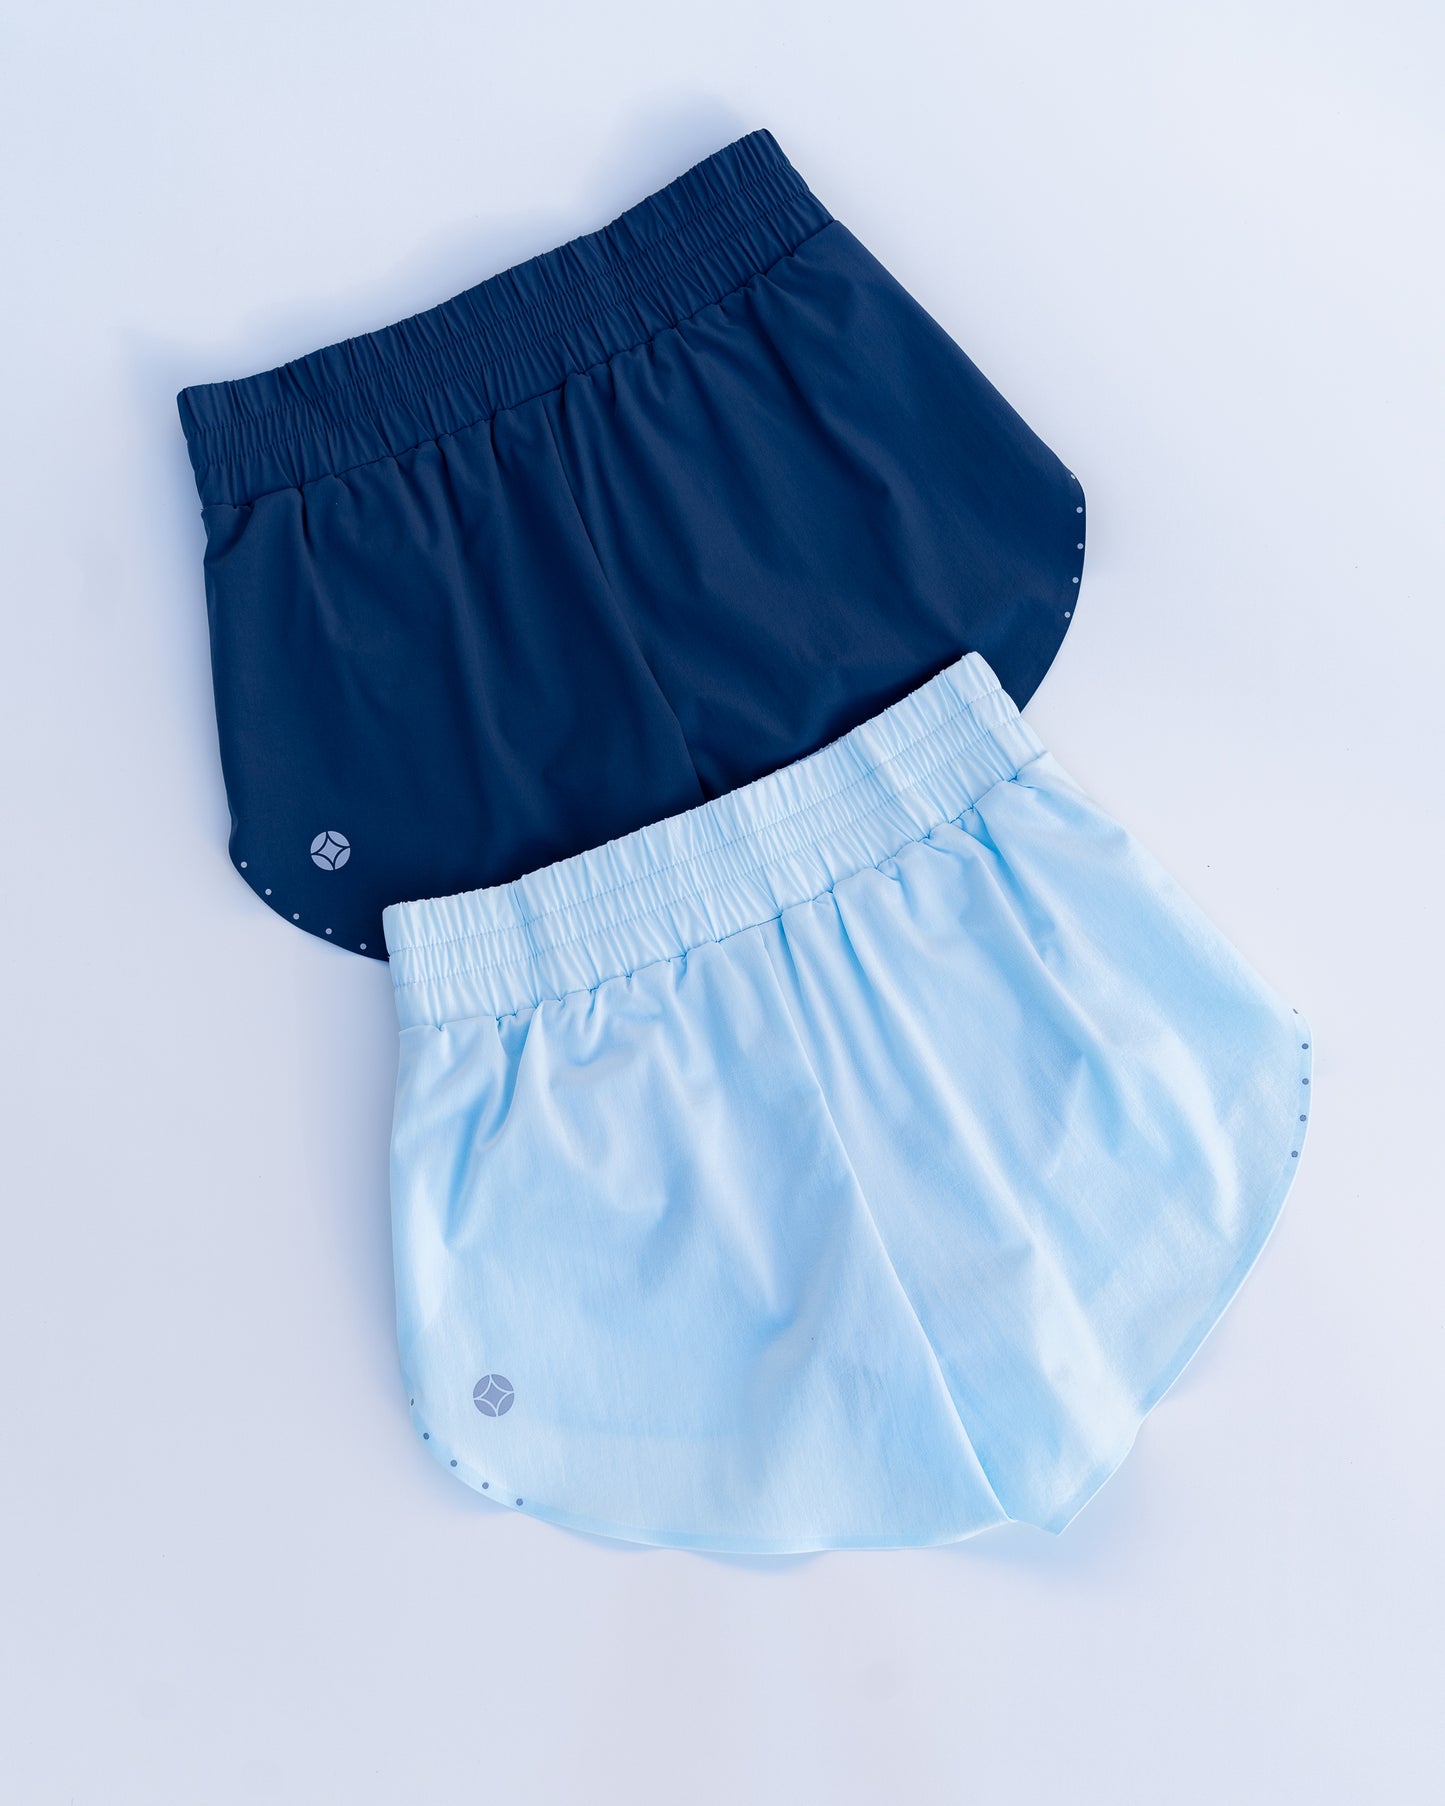 Motier Women's Elevate Shorts (Baby Blue)